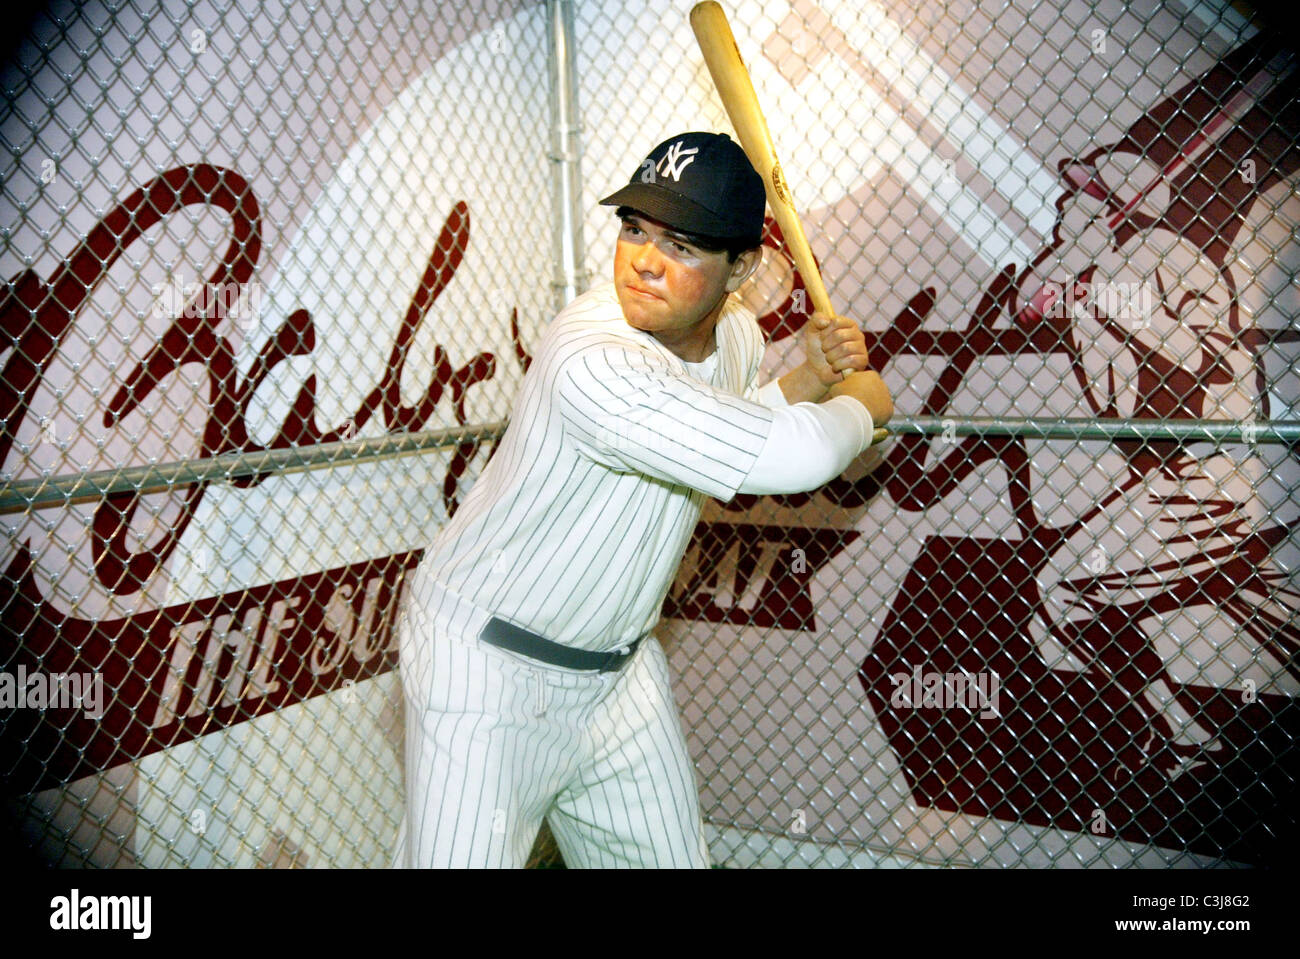 Babe Ruth wax figure of the legendary New York Yankees slugger on